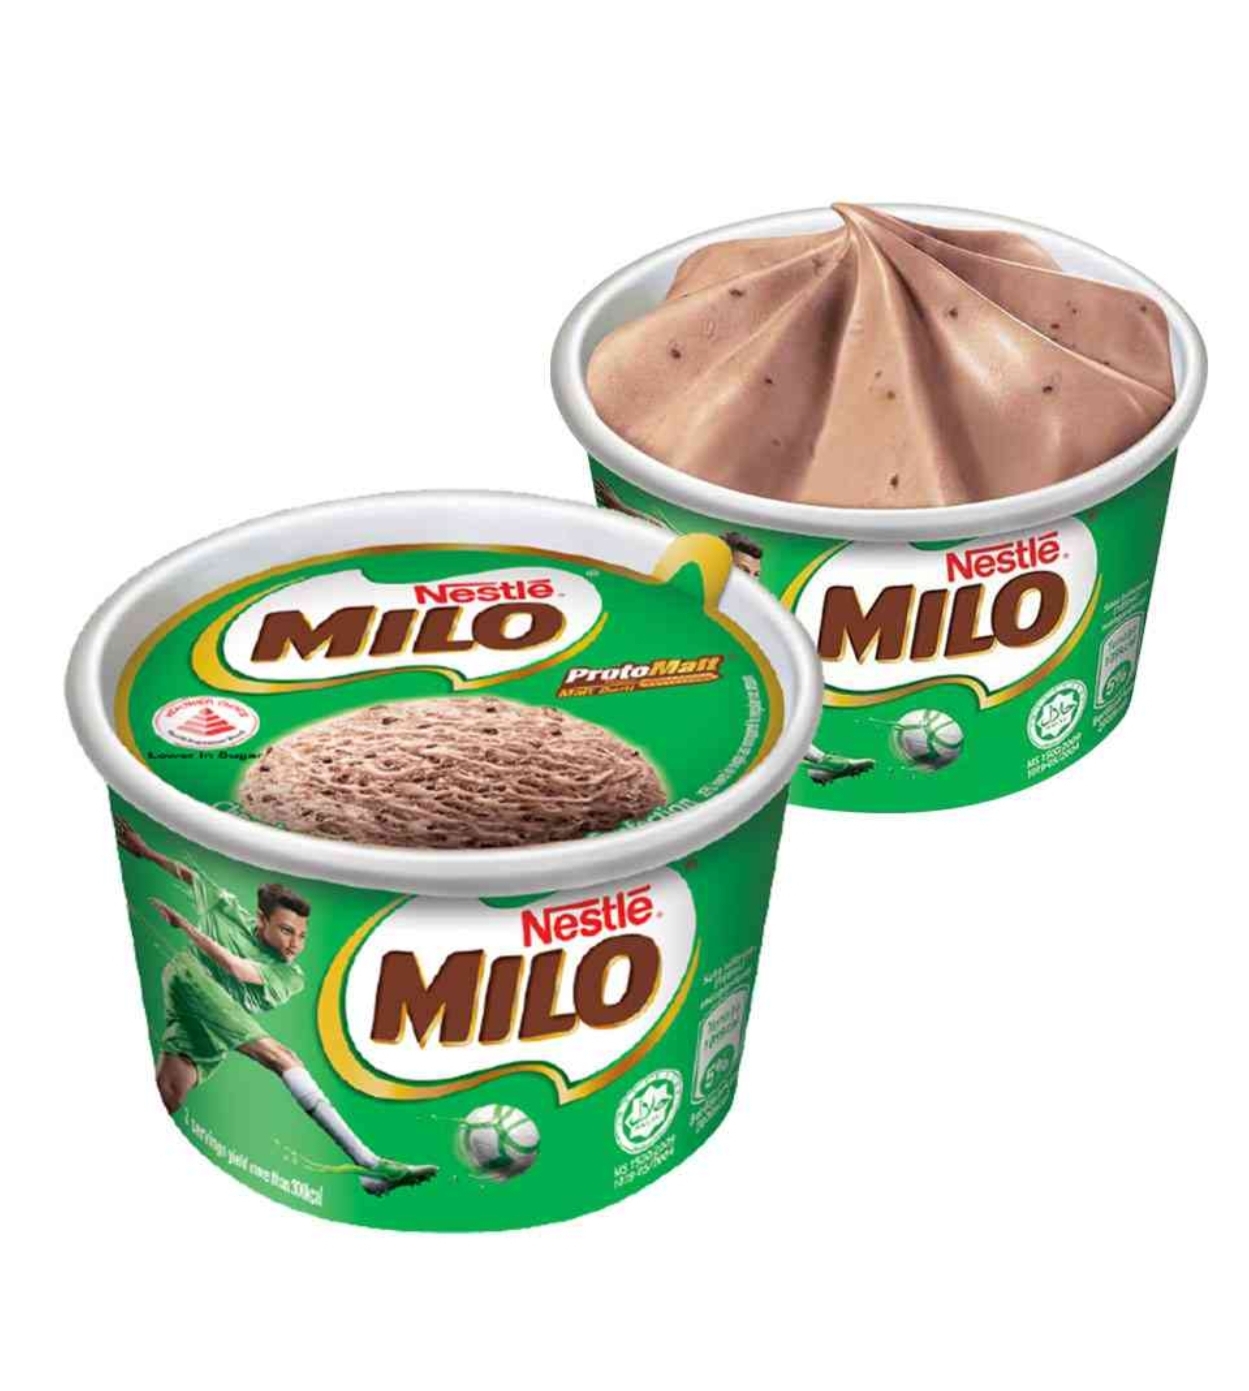 Milo Ice Cream Chocolate Malt Pint (55g)